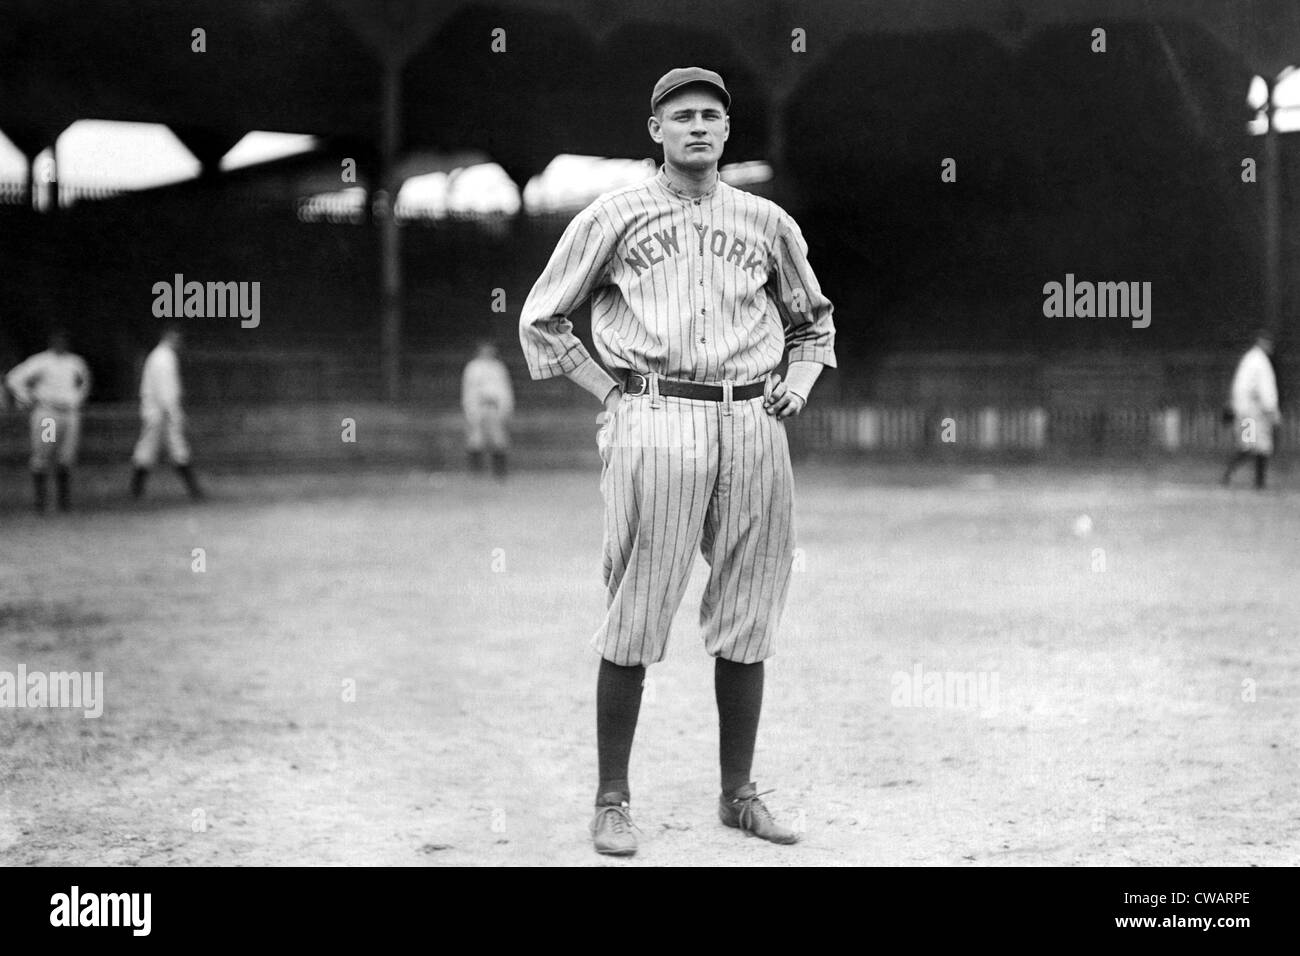 New York Yankee Wally Pipp, c. 1917.. Courtesy: CSU Archives / Everett Collection Stock Photo